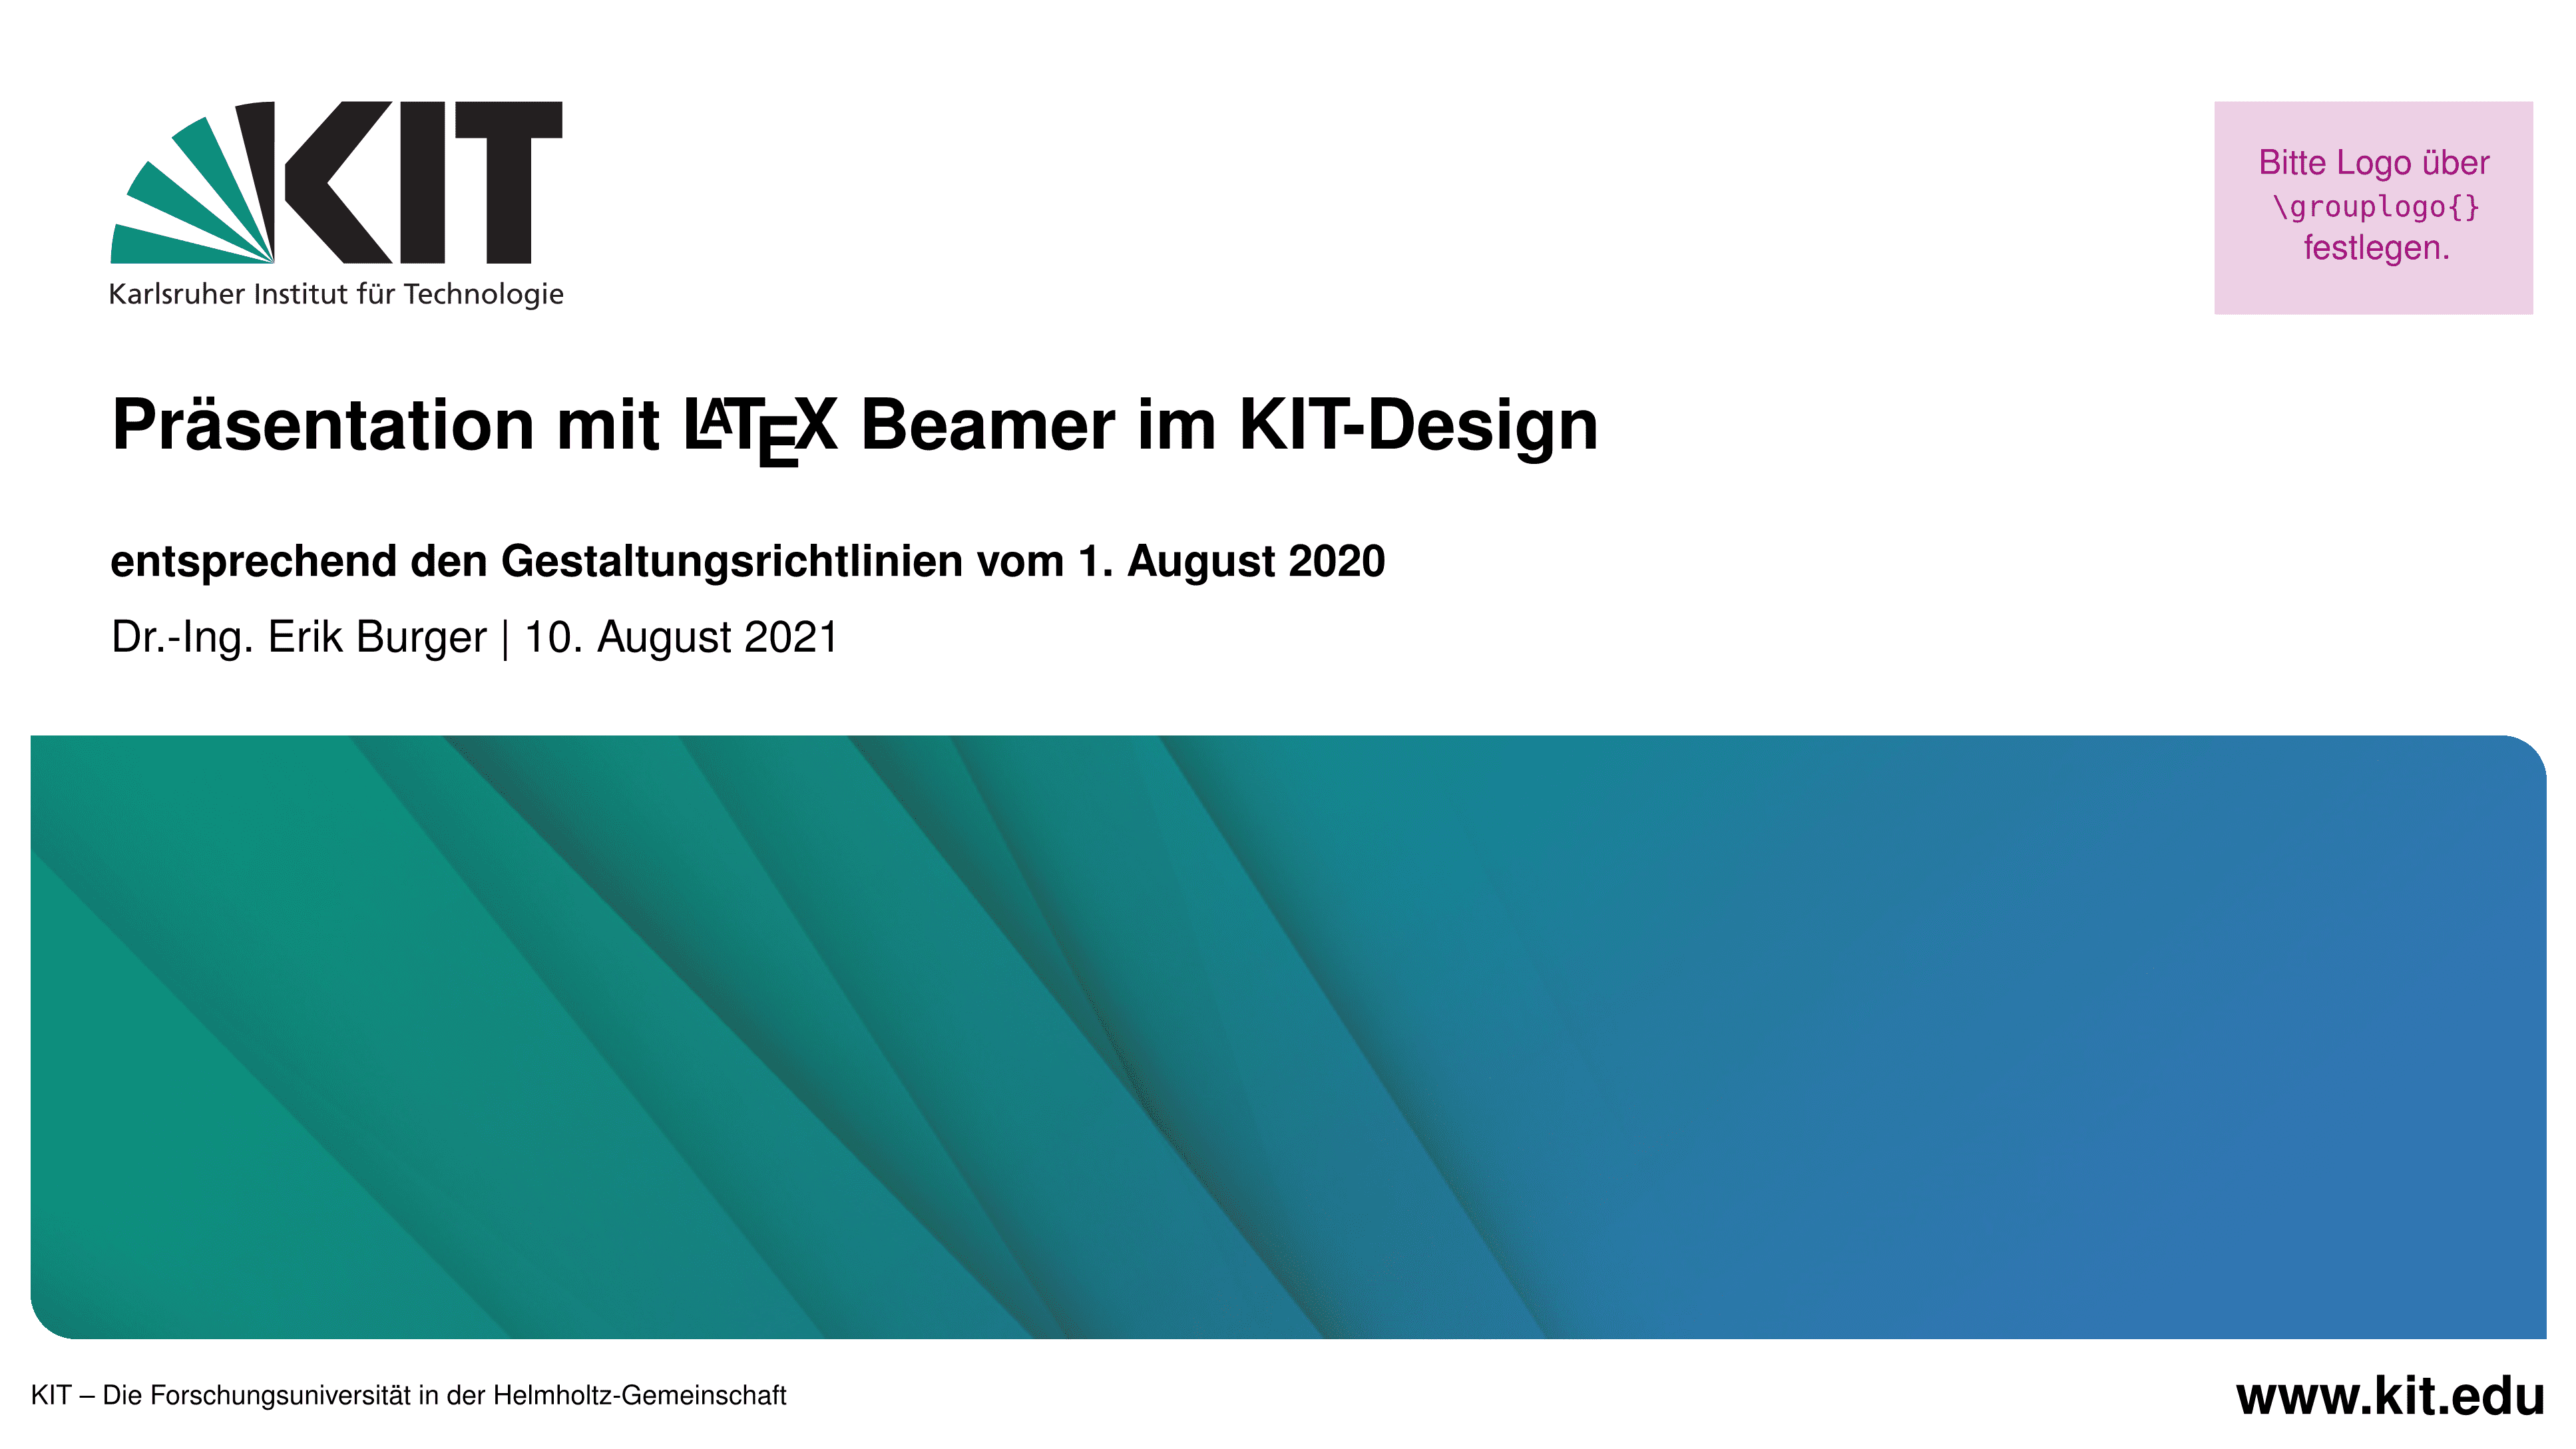 Karlsruhe Institute of Technology SDQ研究组 Beamer 模版